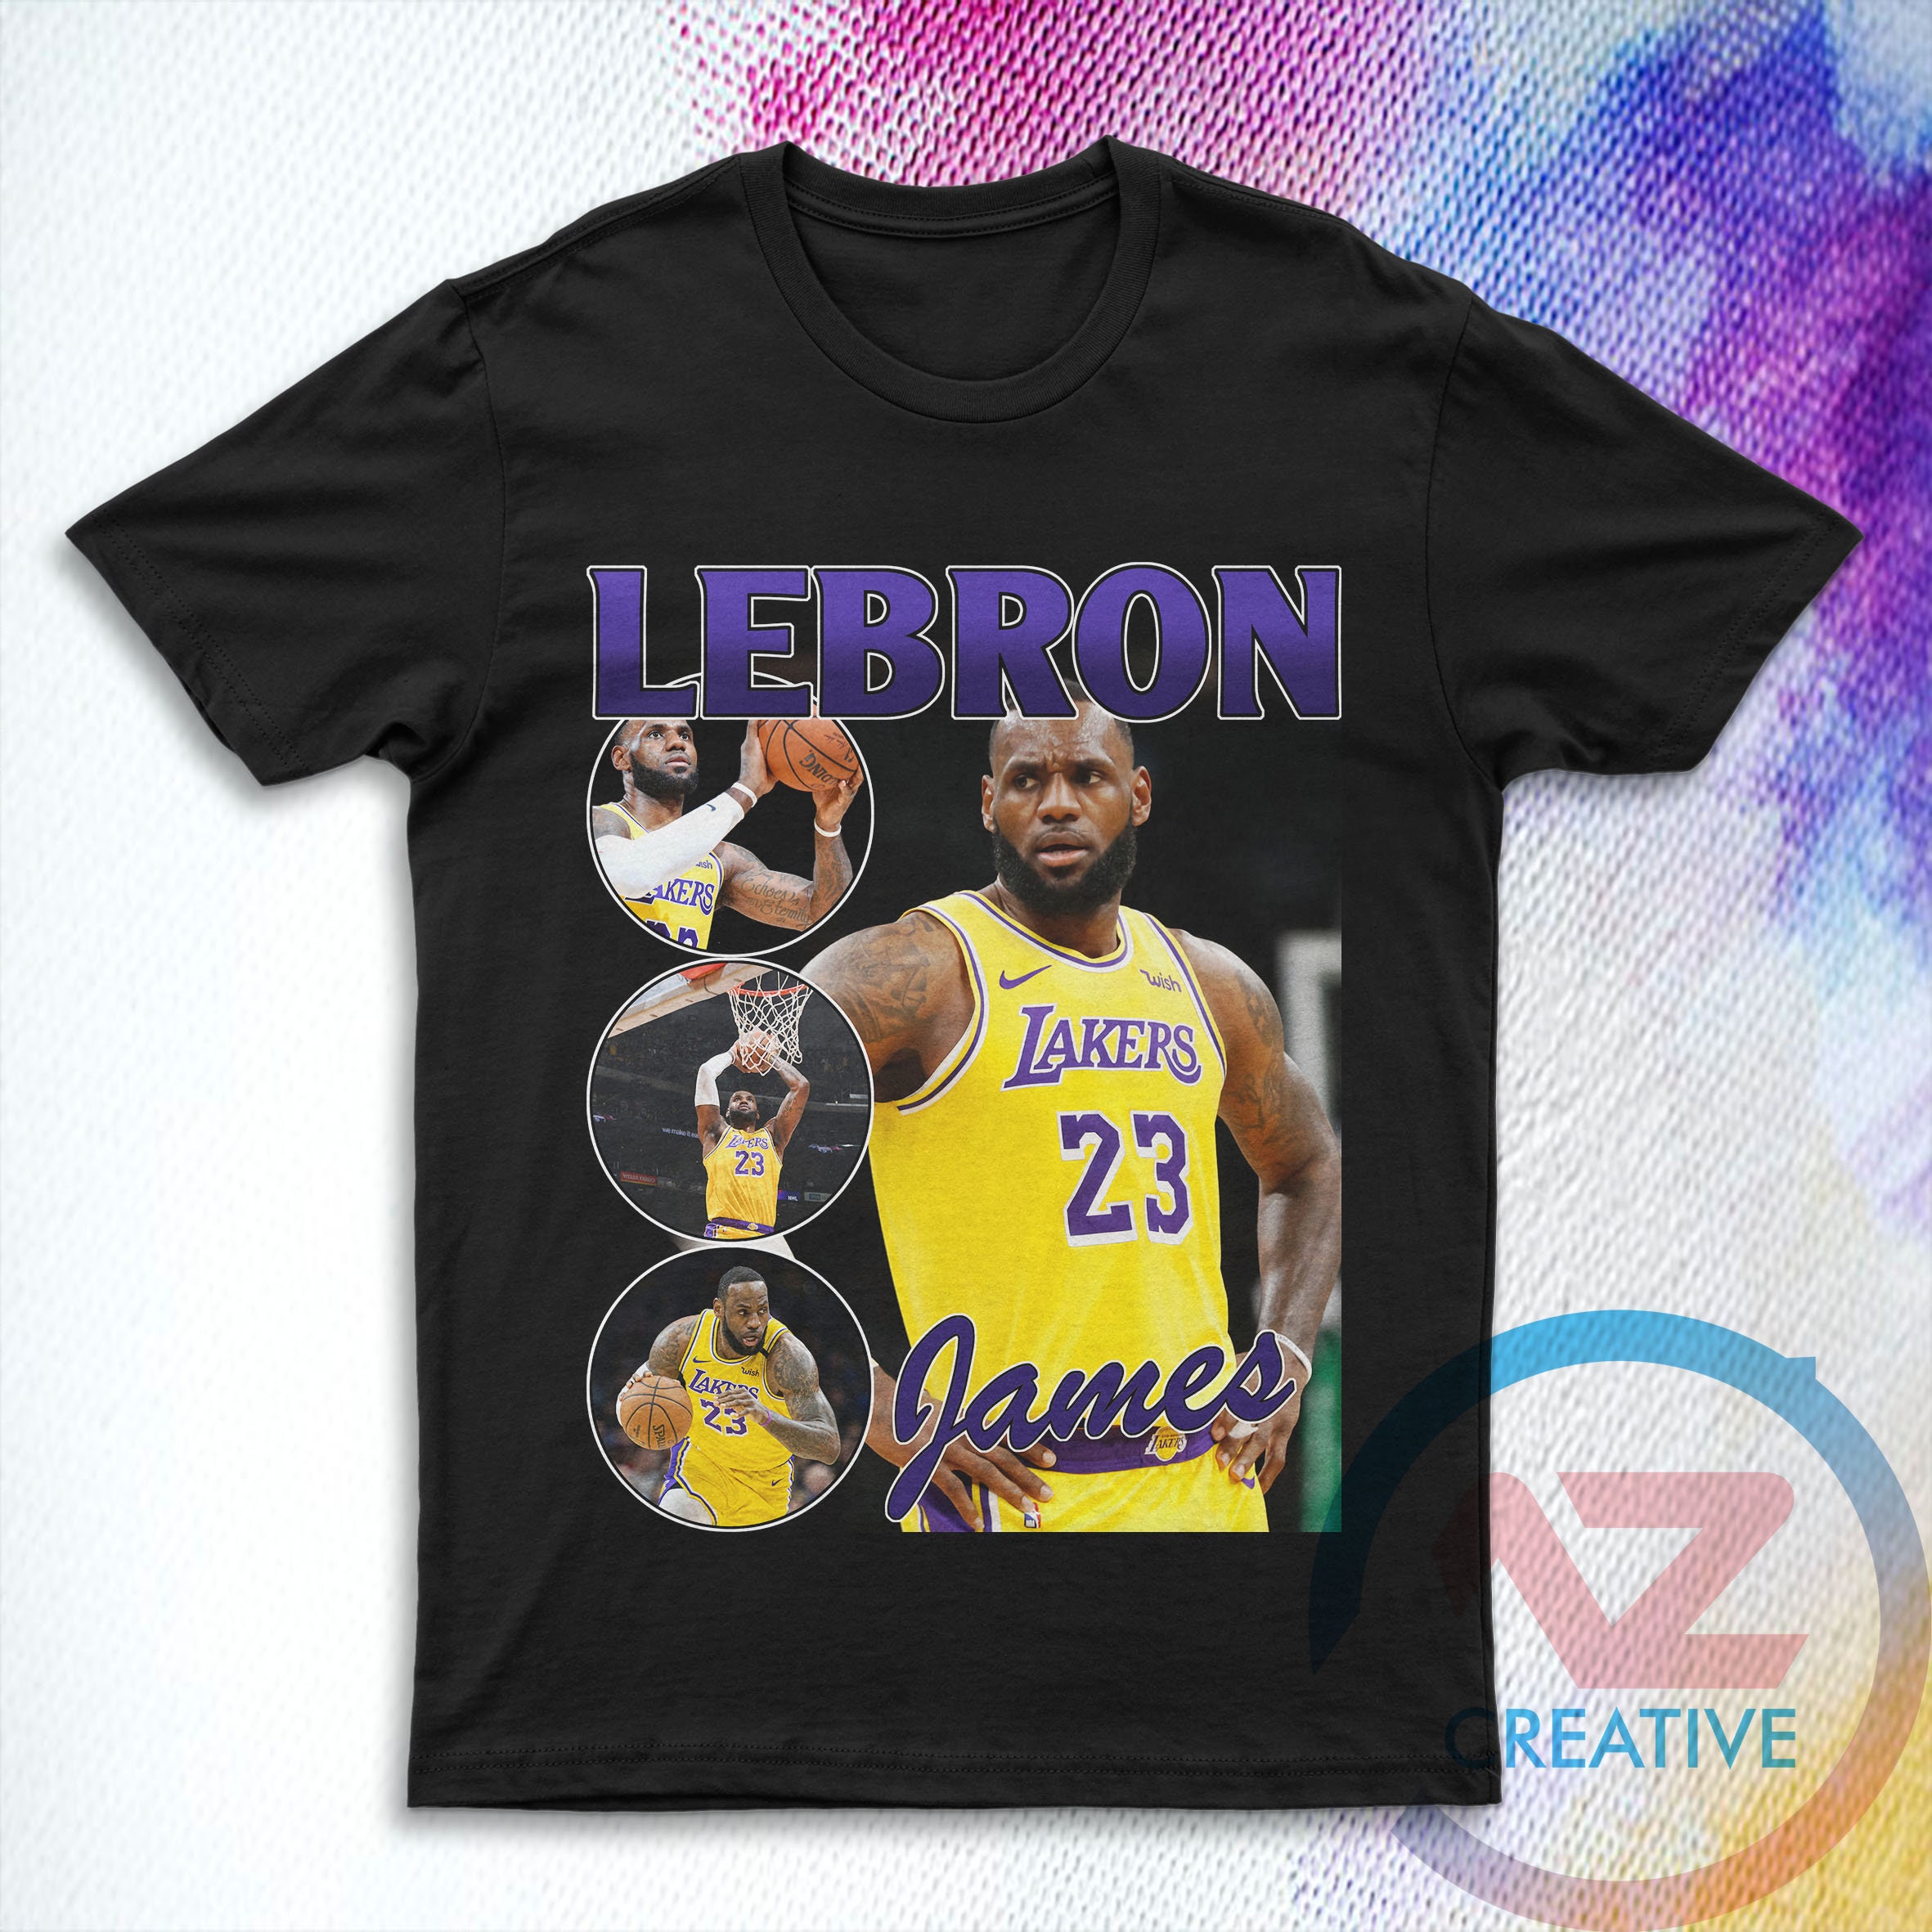 Lebron James Vintage Shirt Basketball Shirt 90s Men's 